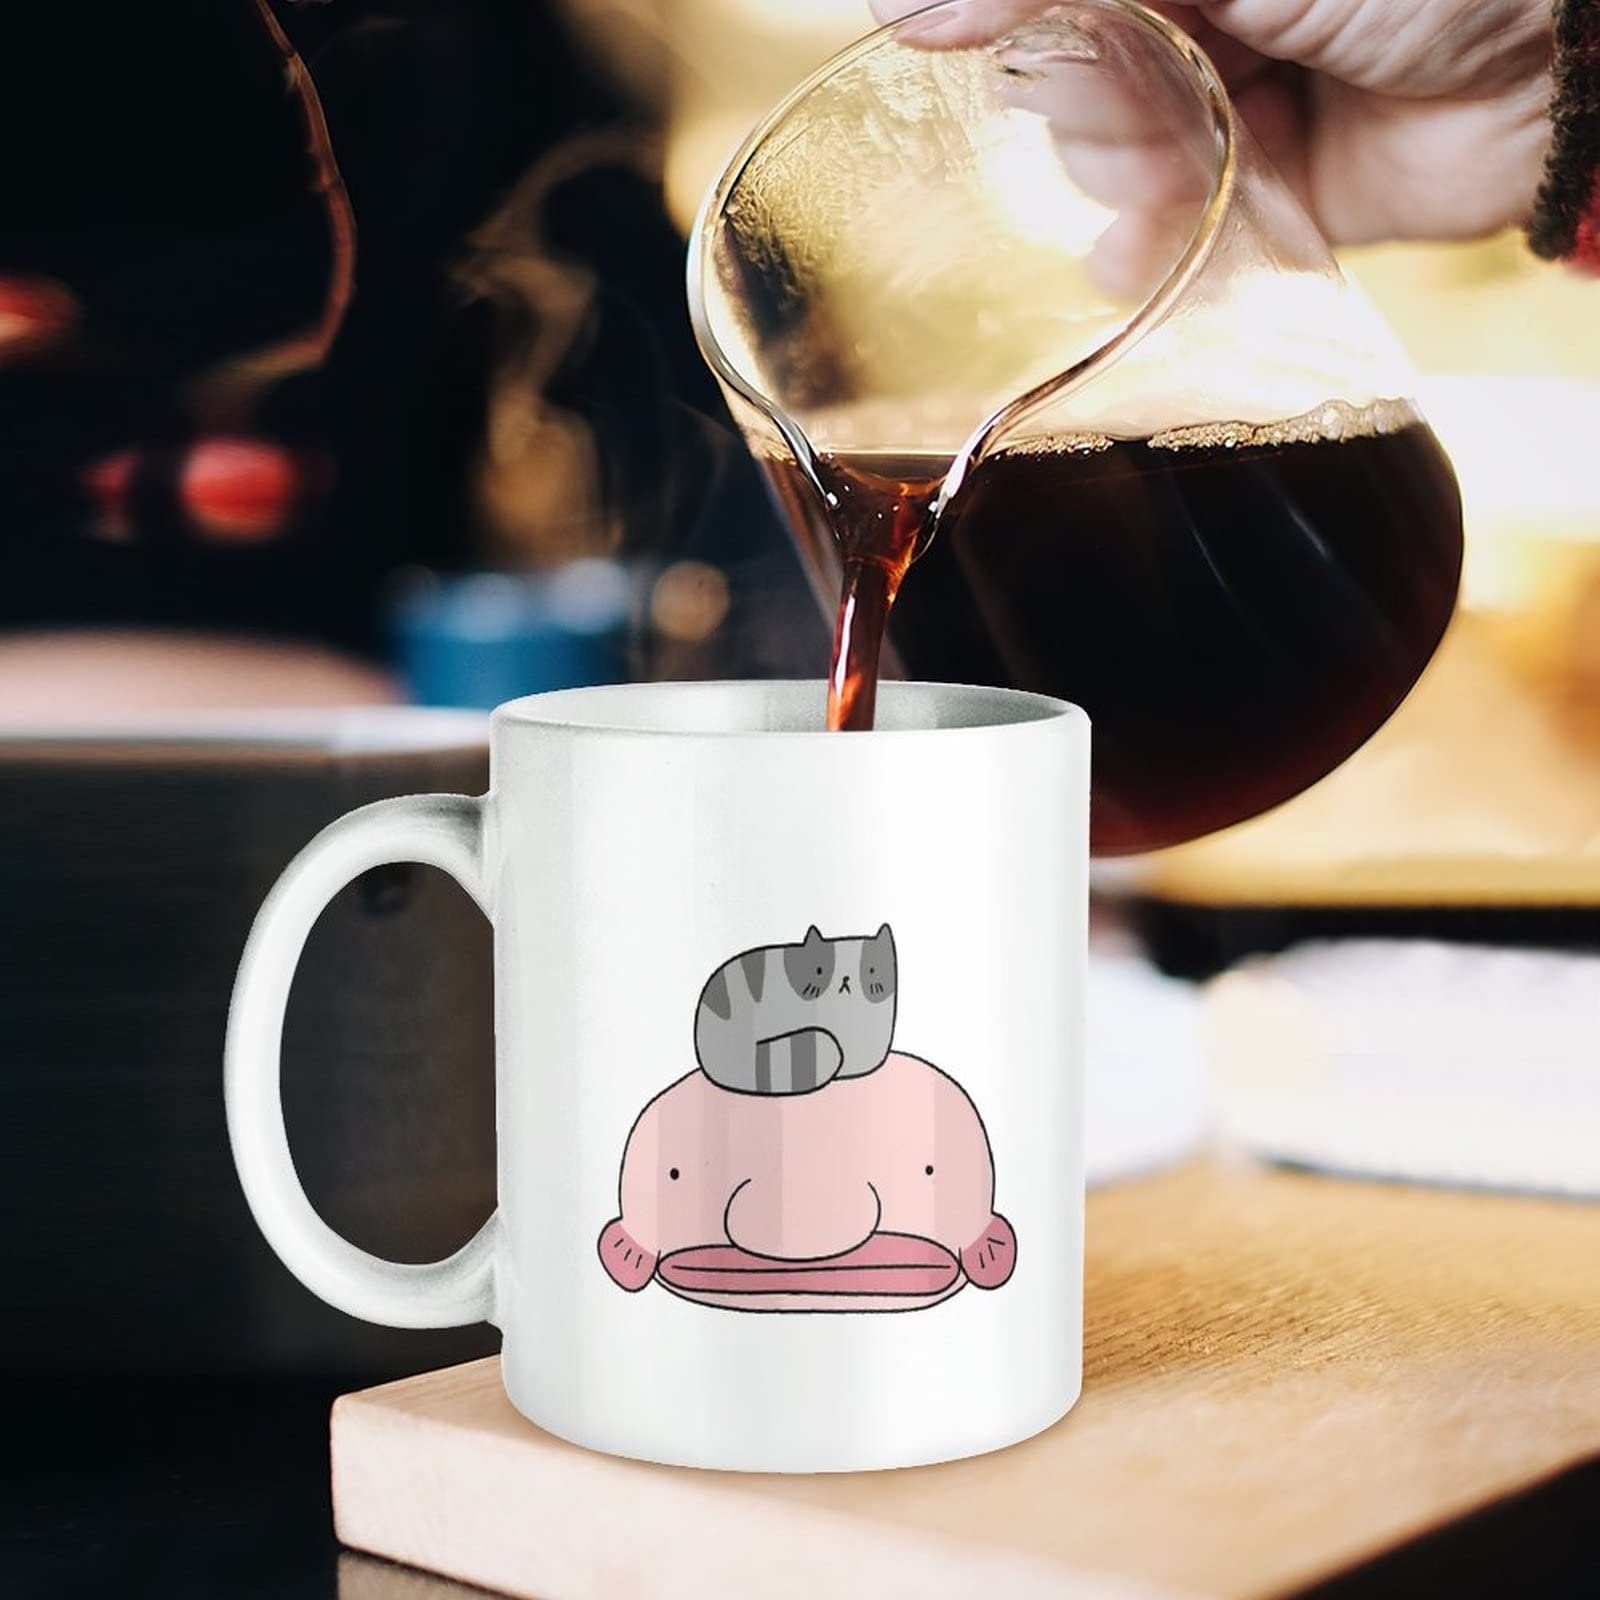 Cute Blobfish and Cat Mugs Ceramic Tea Cup Print Coffee Mug Drinking Cups with Handles